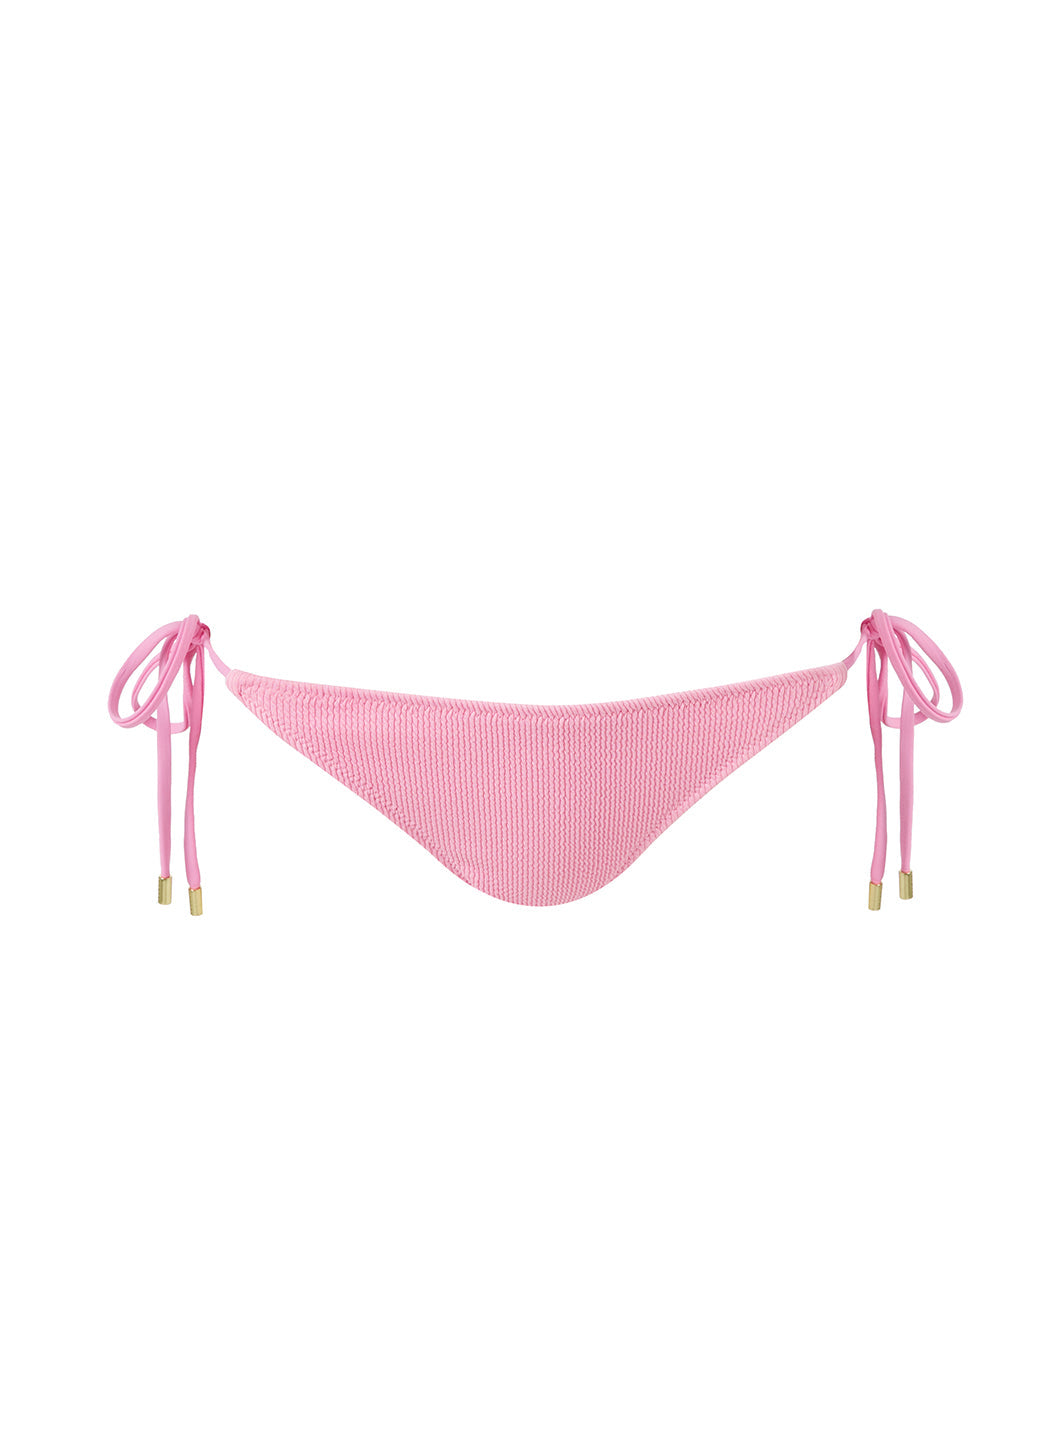 melbourne pink ridges bikini bottom cutouts 2024